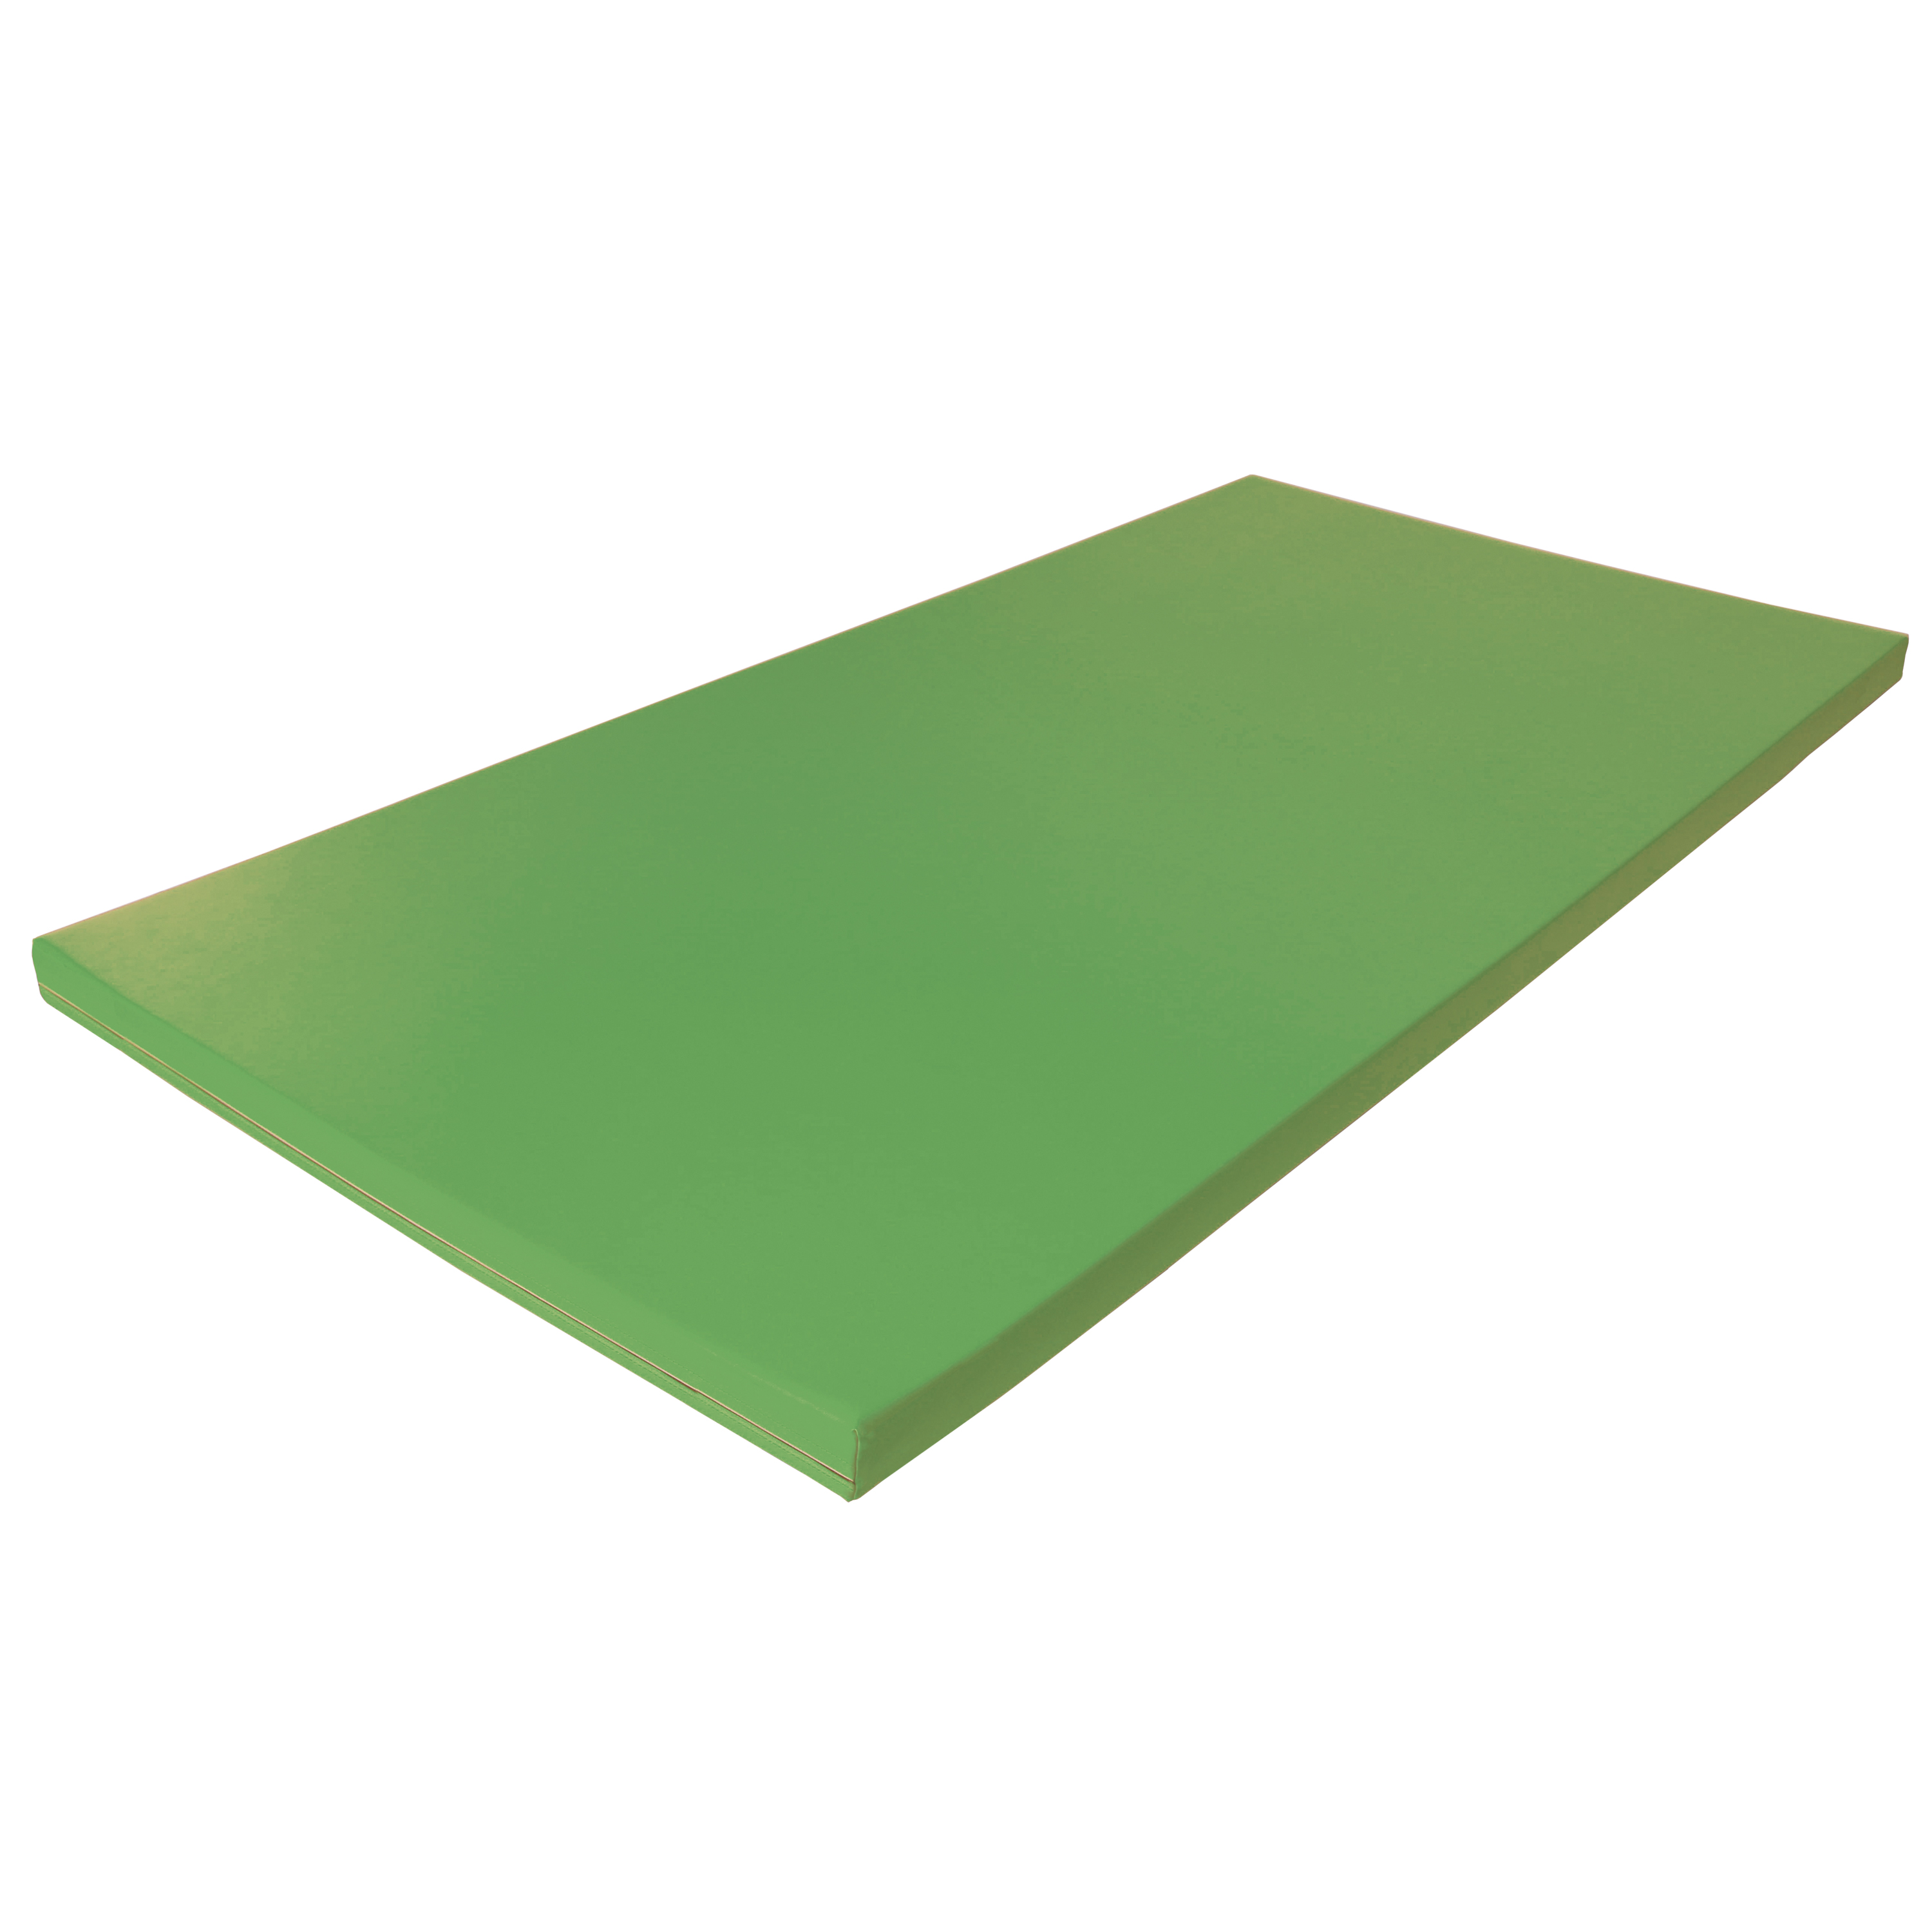 Fallschutzmatte Superleicht 'hellgrün', 150 x 100 cm